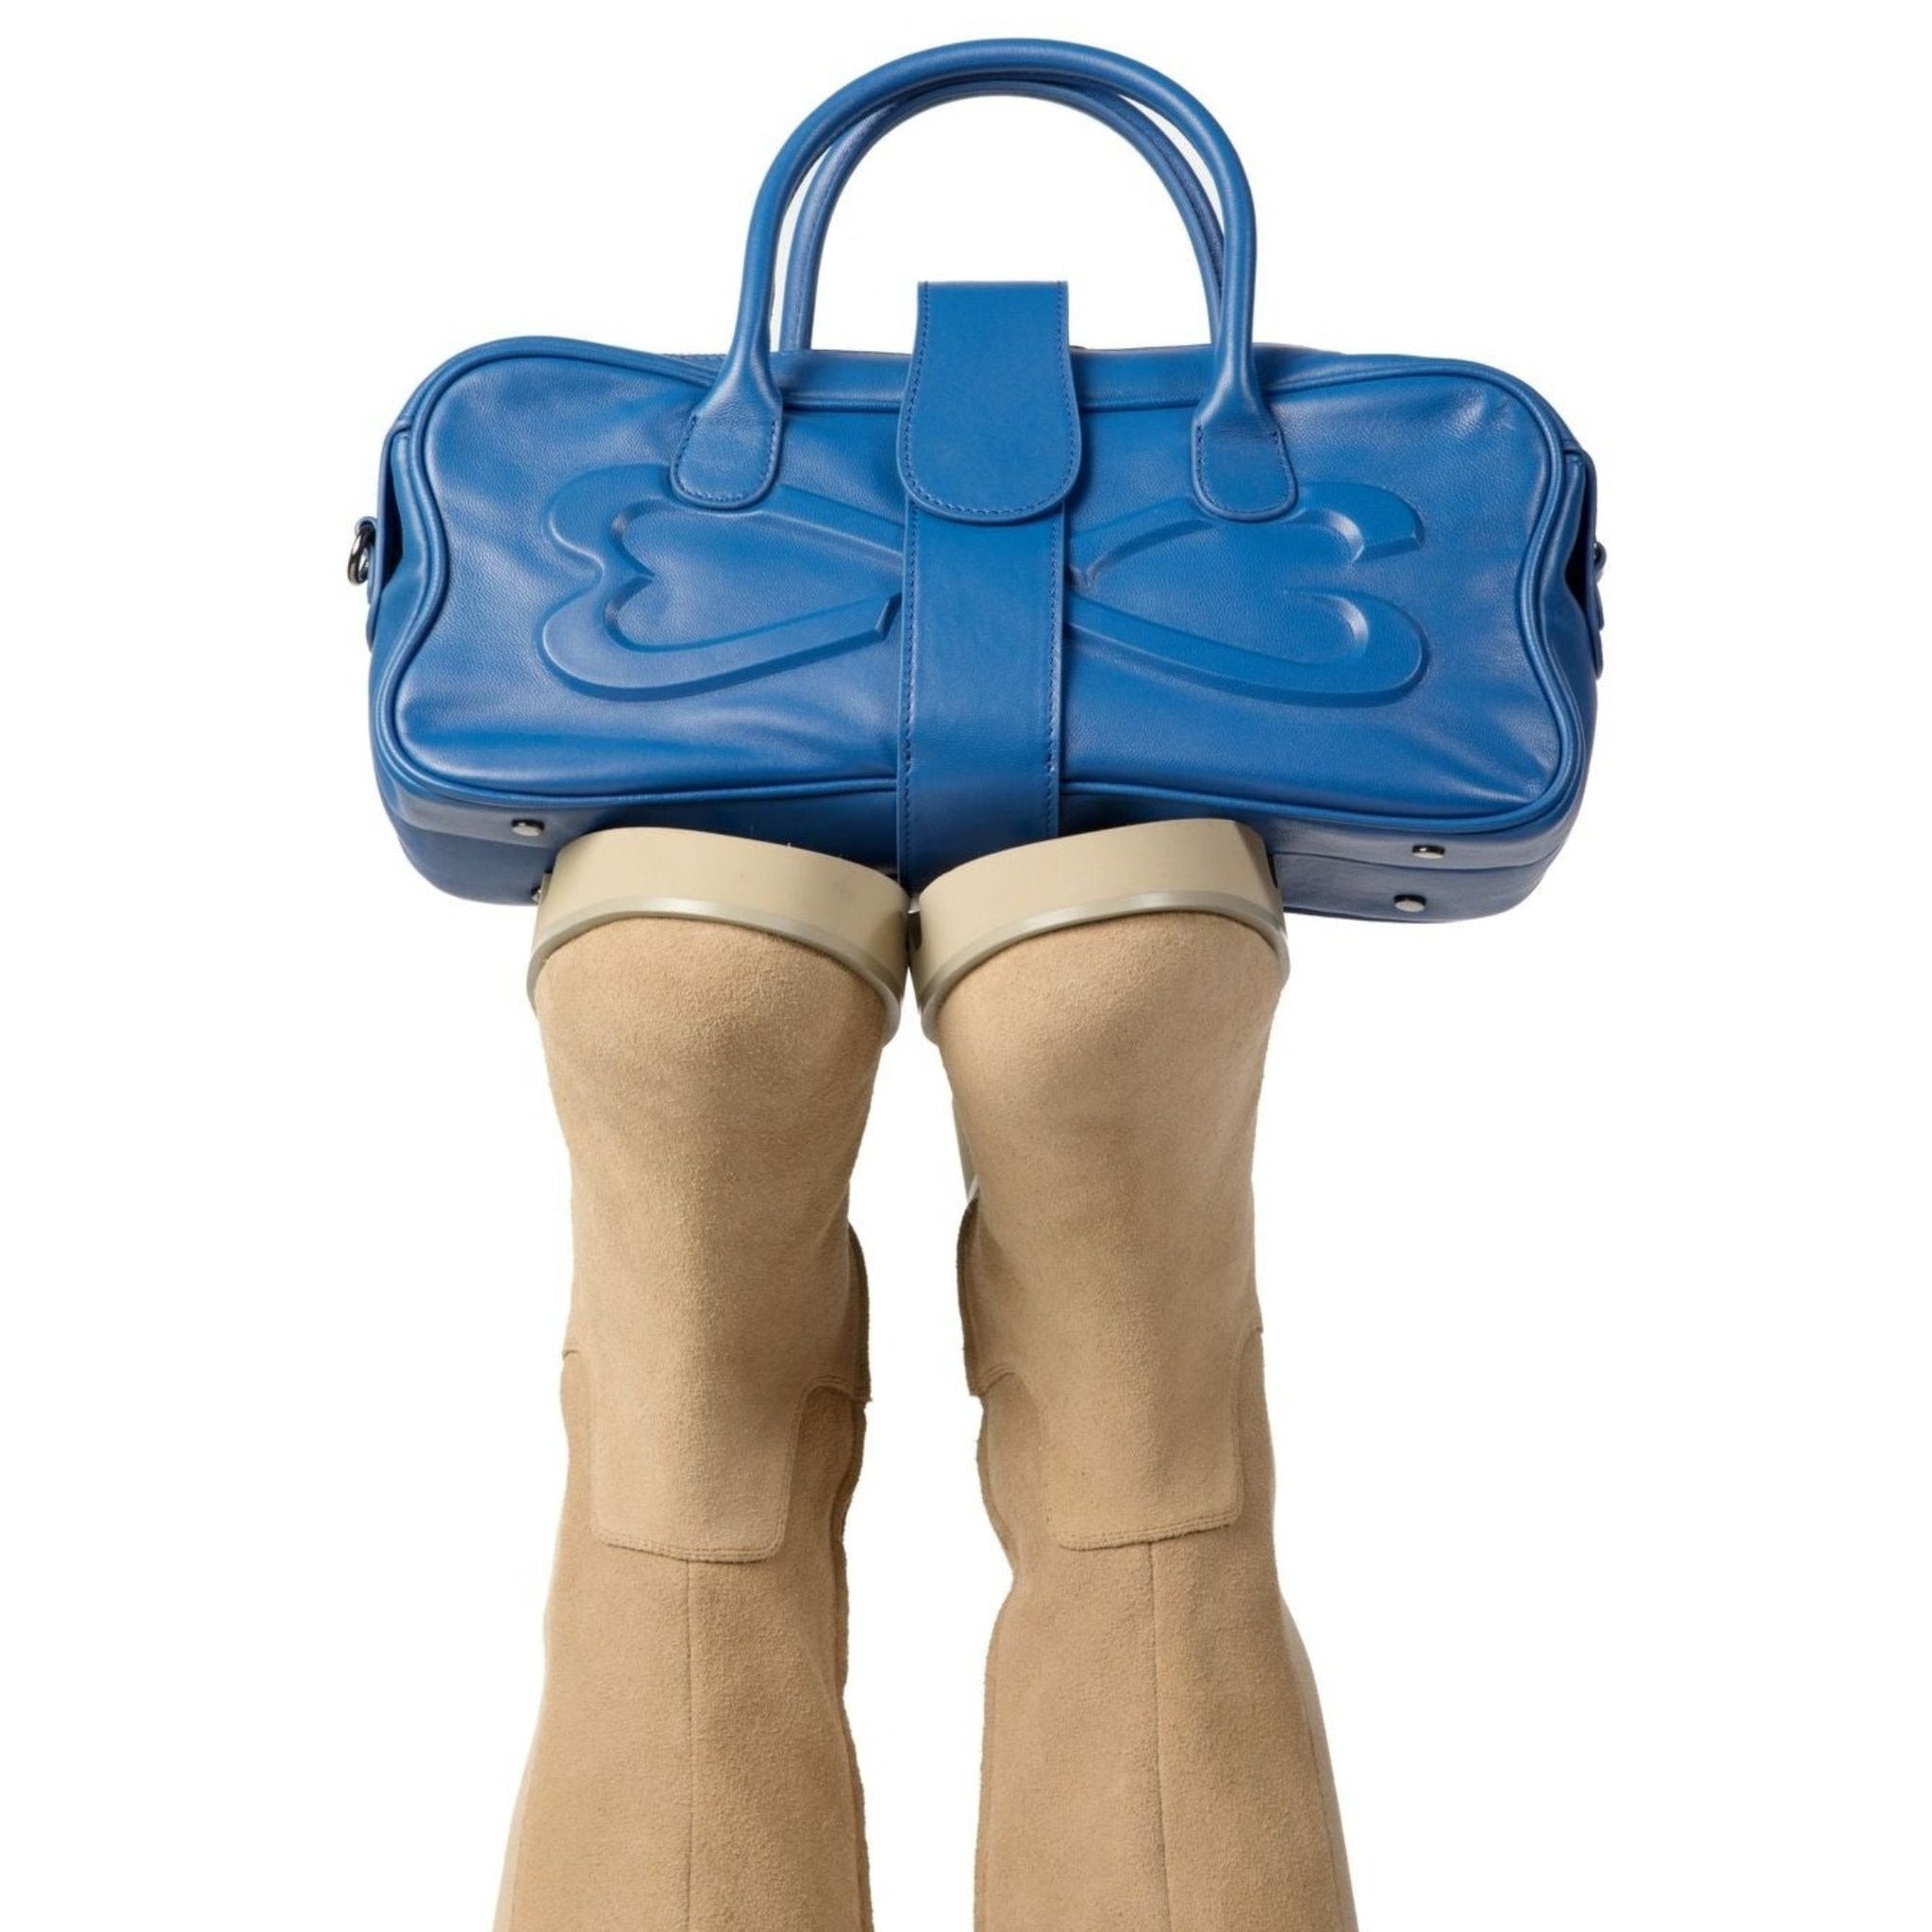 Pecan suede boots with unique nappa blue leather handbag